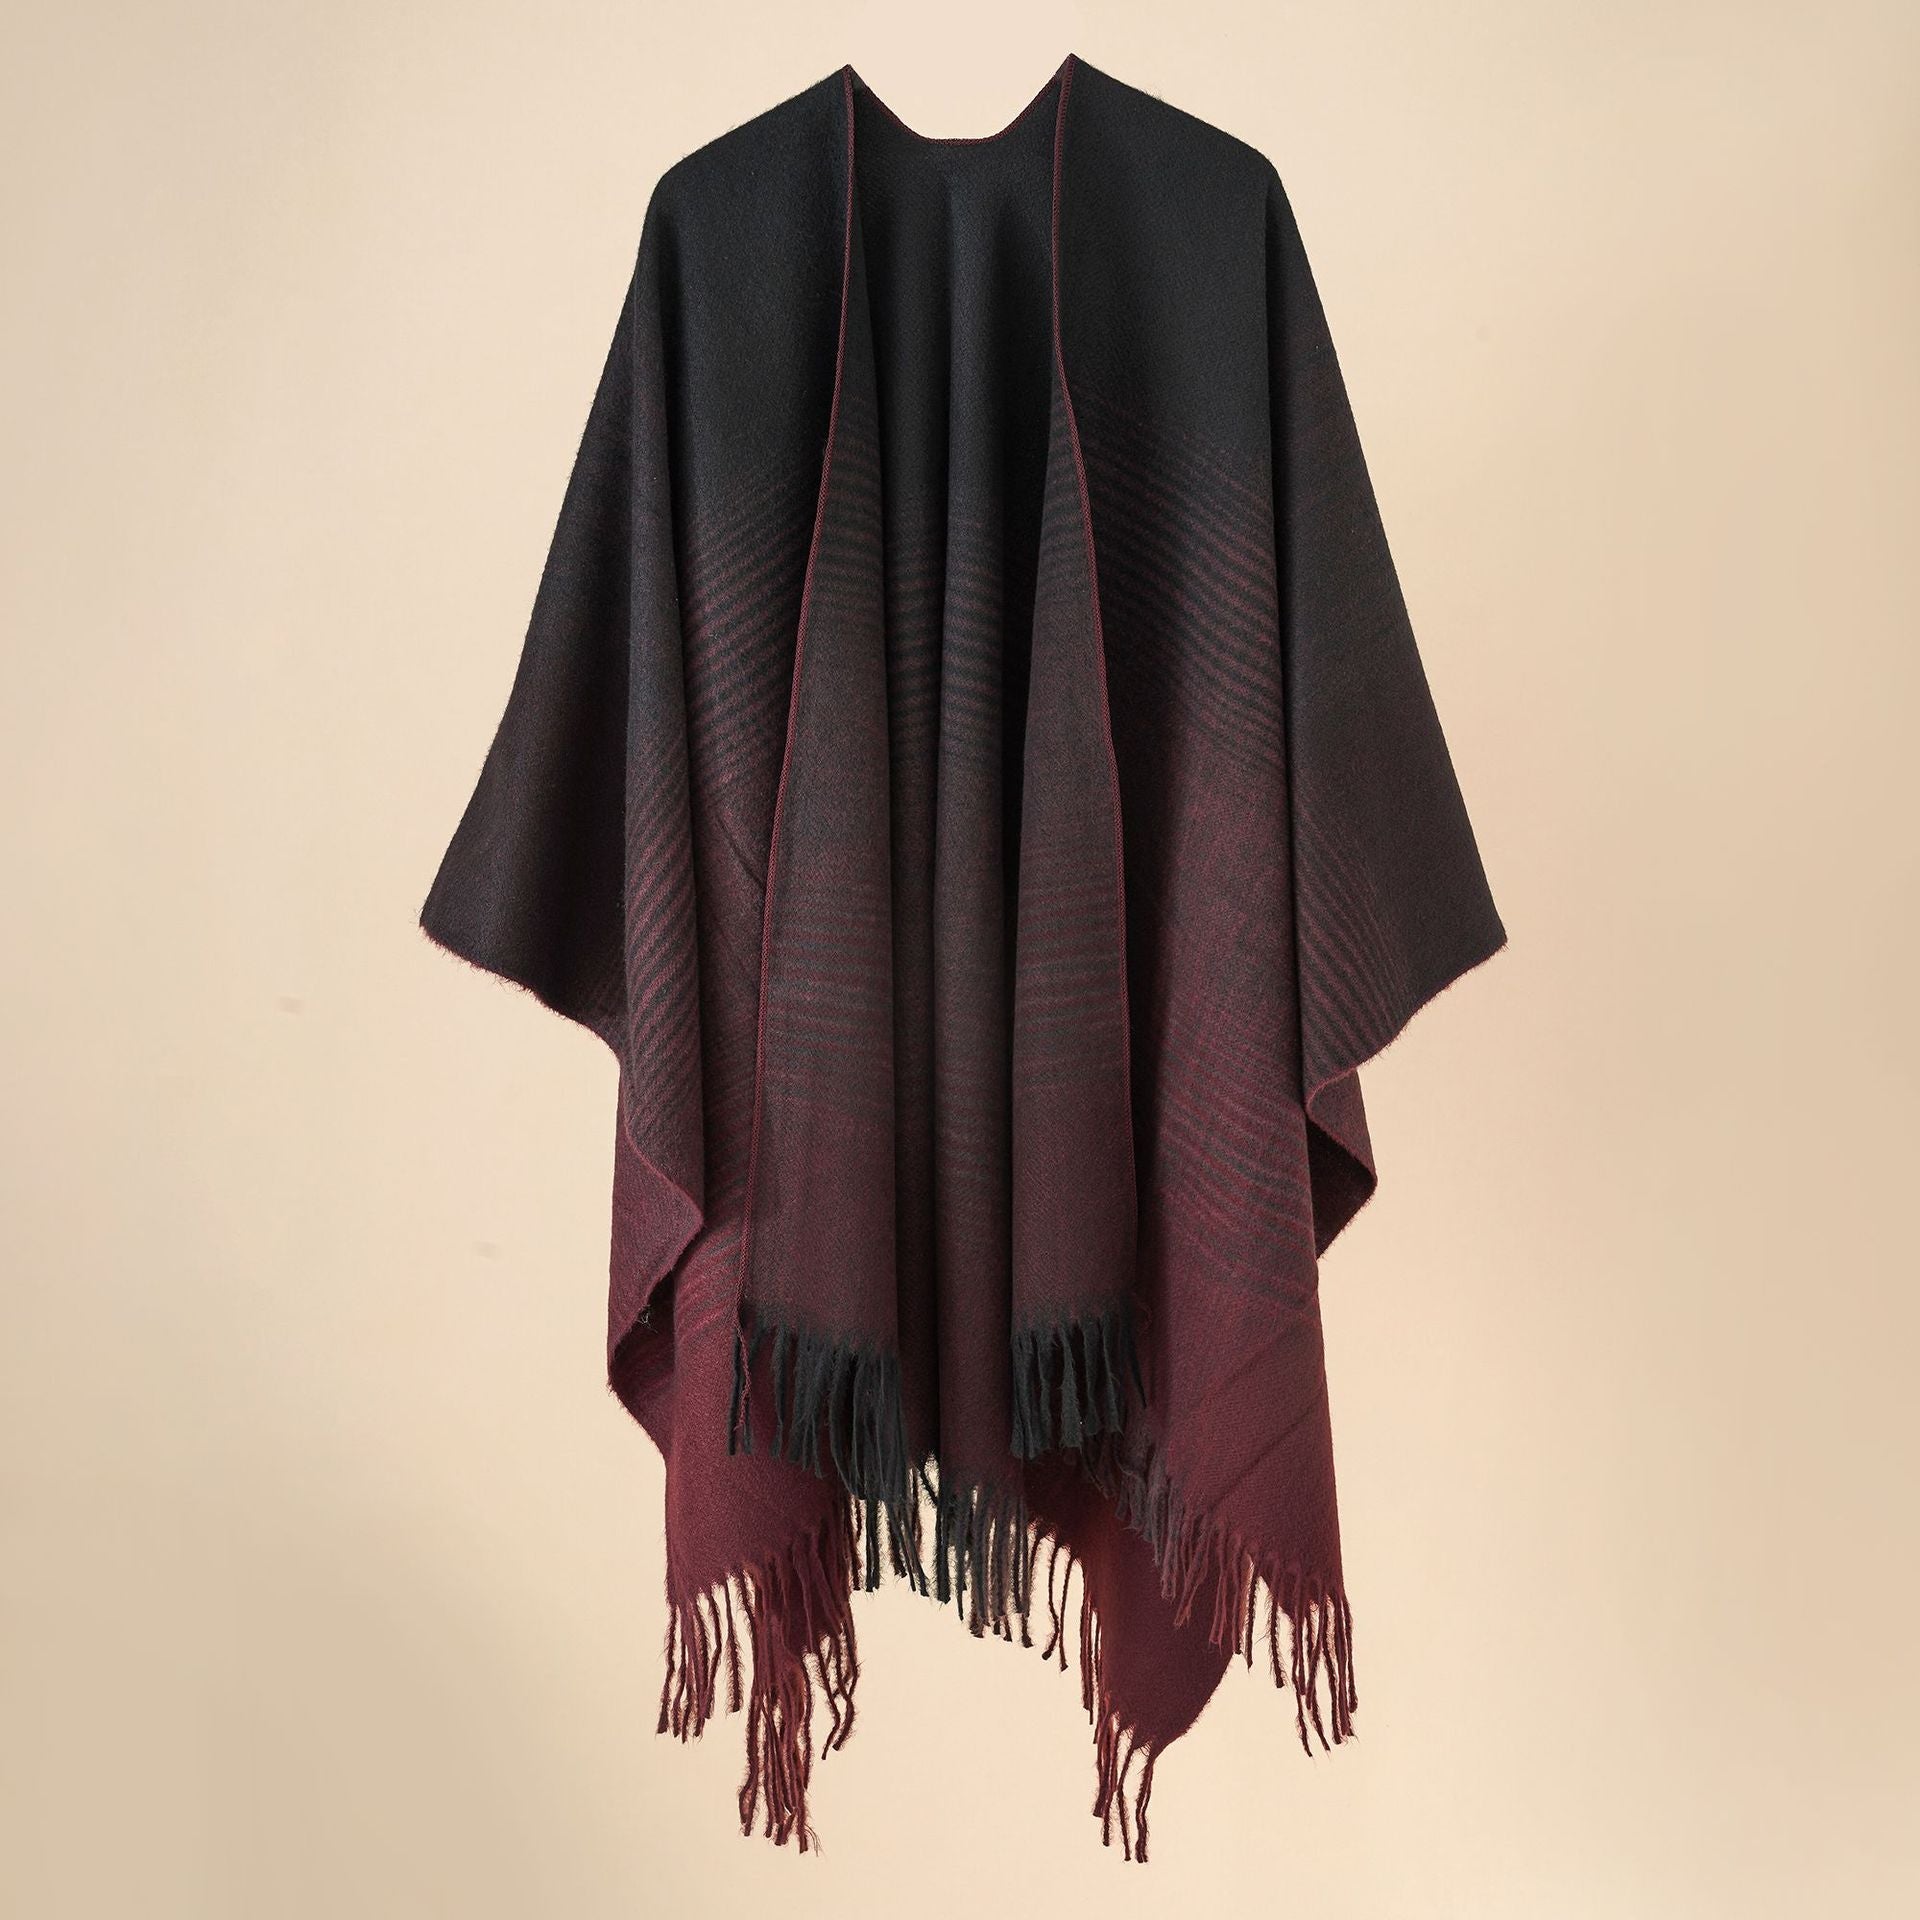 Fashion Tassels Shawls for Women-shawls-Black-155CM-Free Shipping at meselling99